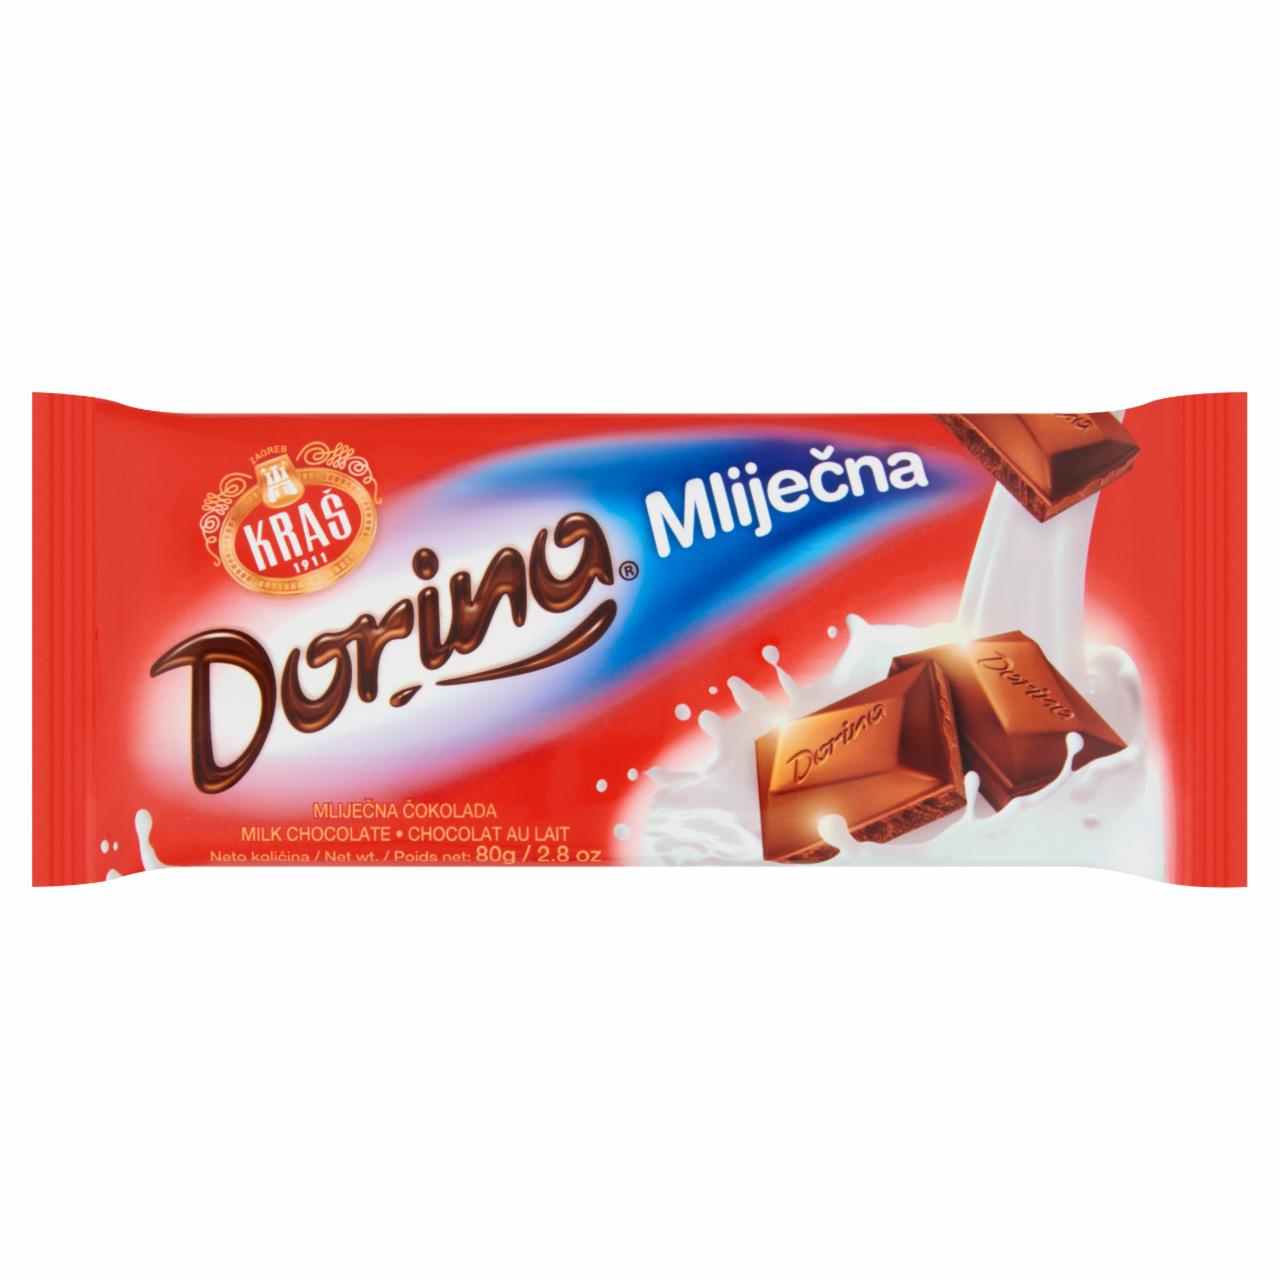 Képek - Kraš Dorina tejcsokoládé 80 g